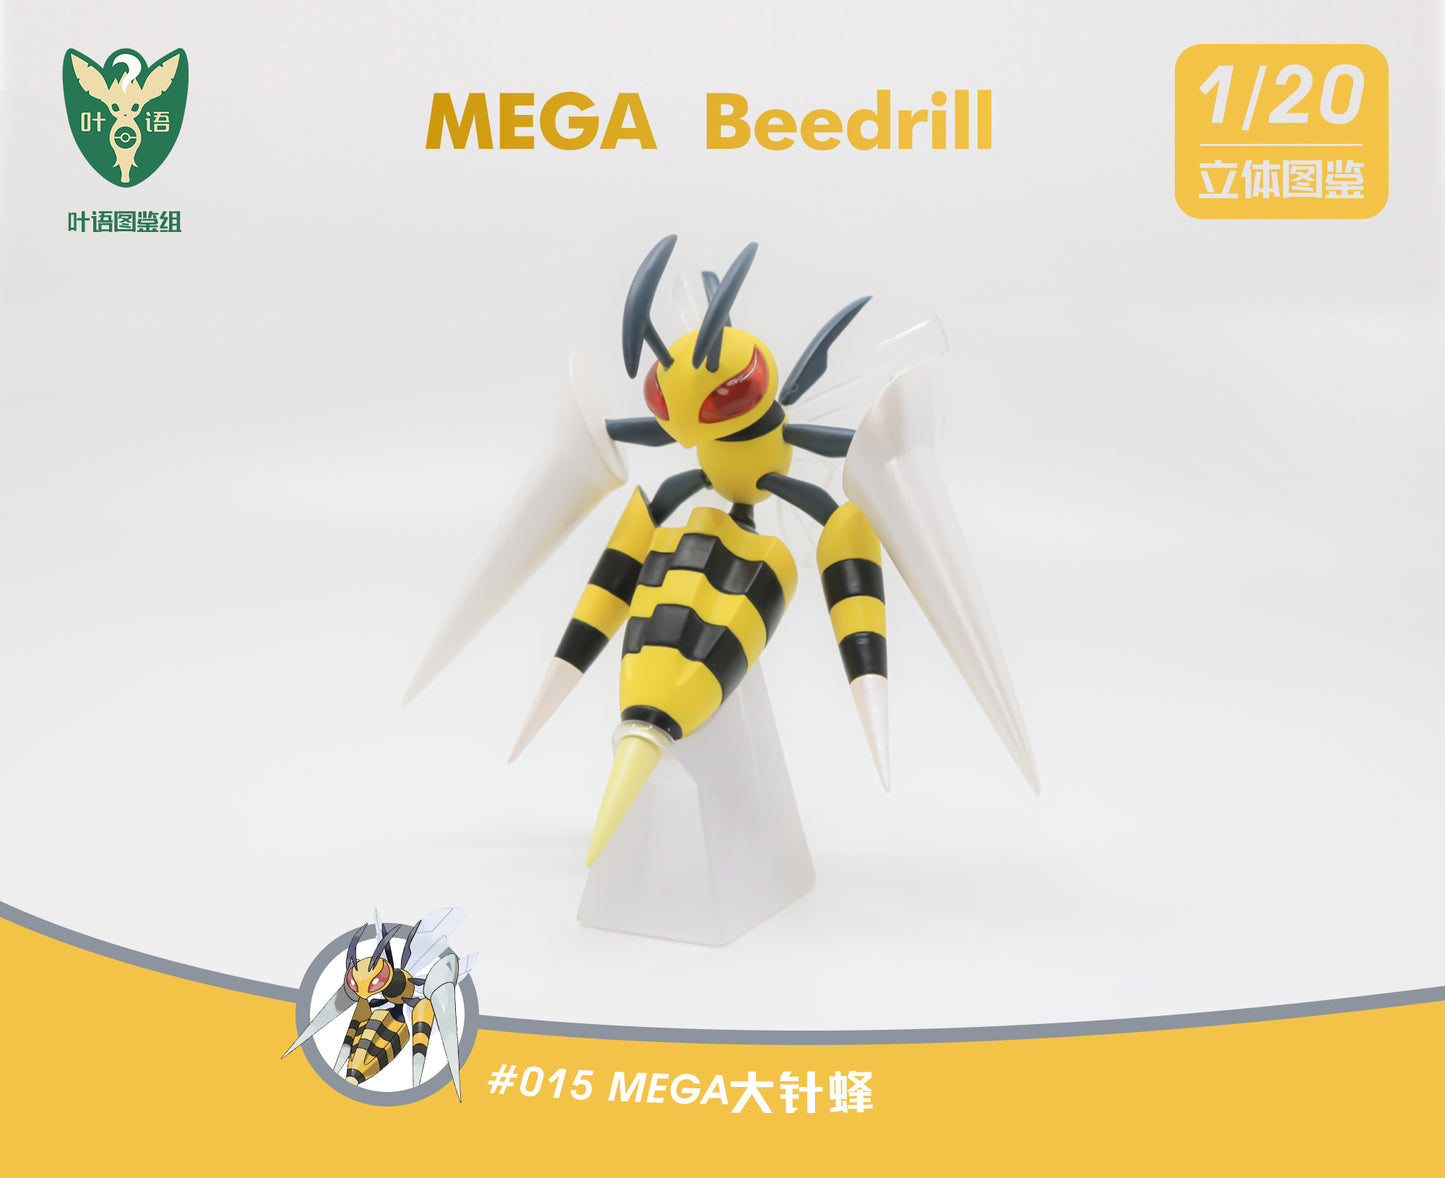 [IN STOCK] 1/20 Scale World Figure [YEYU Studio] - Mega Beedrill